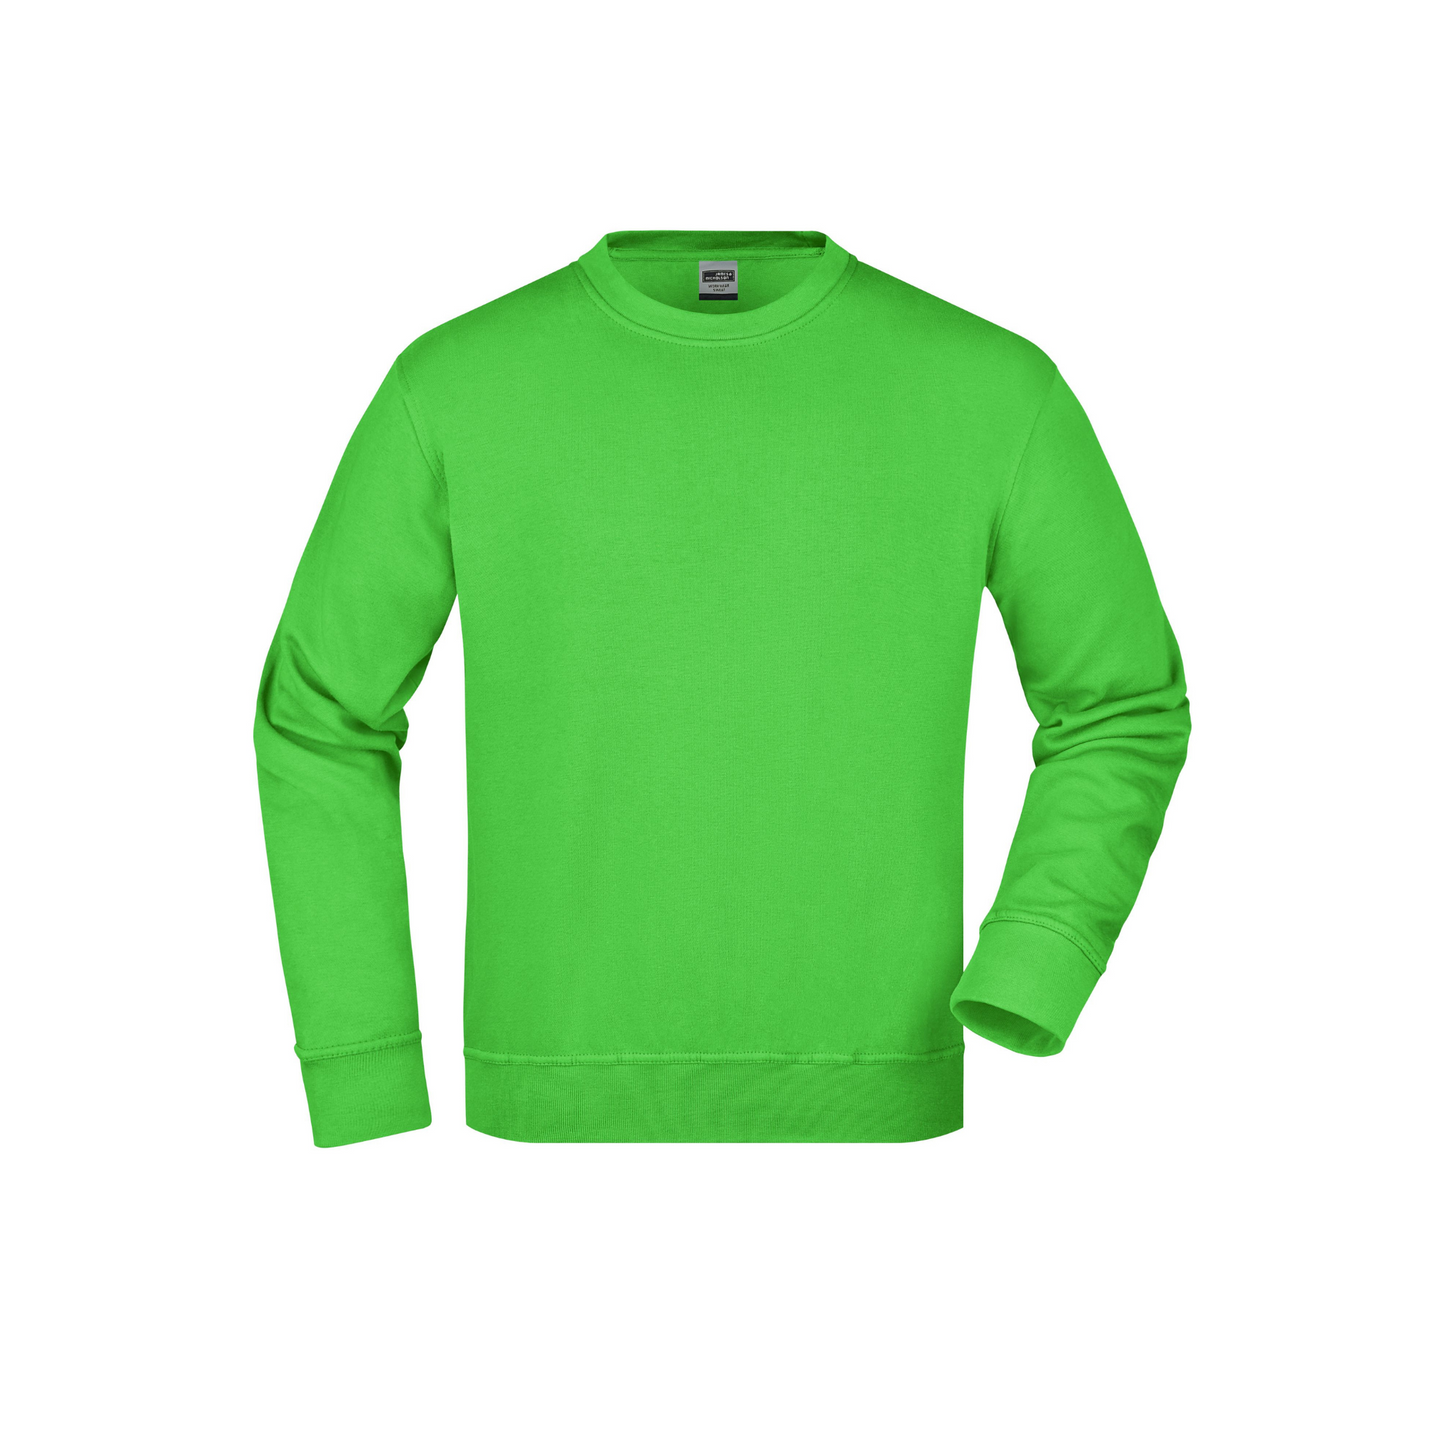 Budget Workwear Sweater (Men/ Unisex)